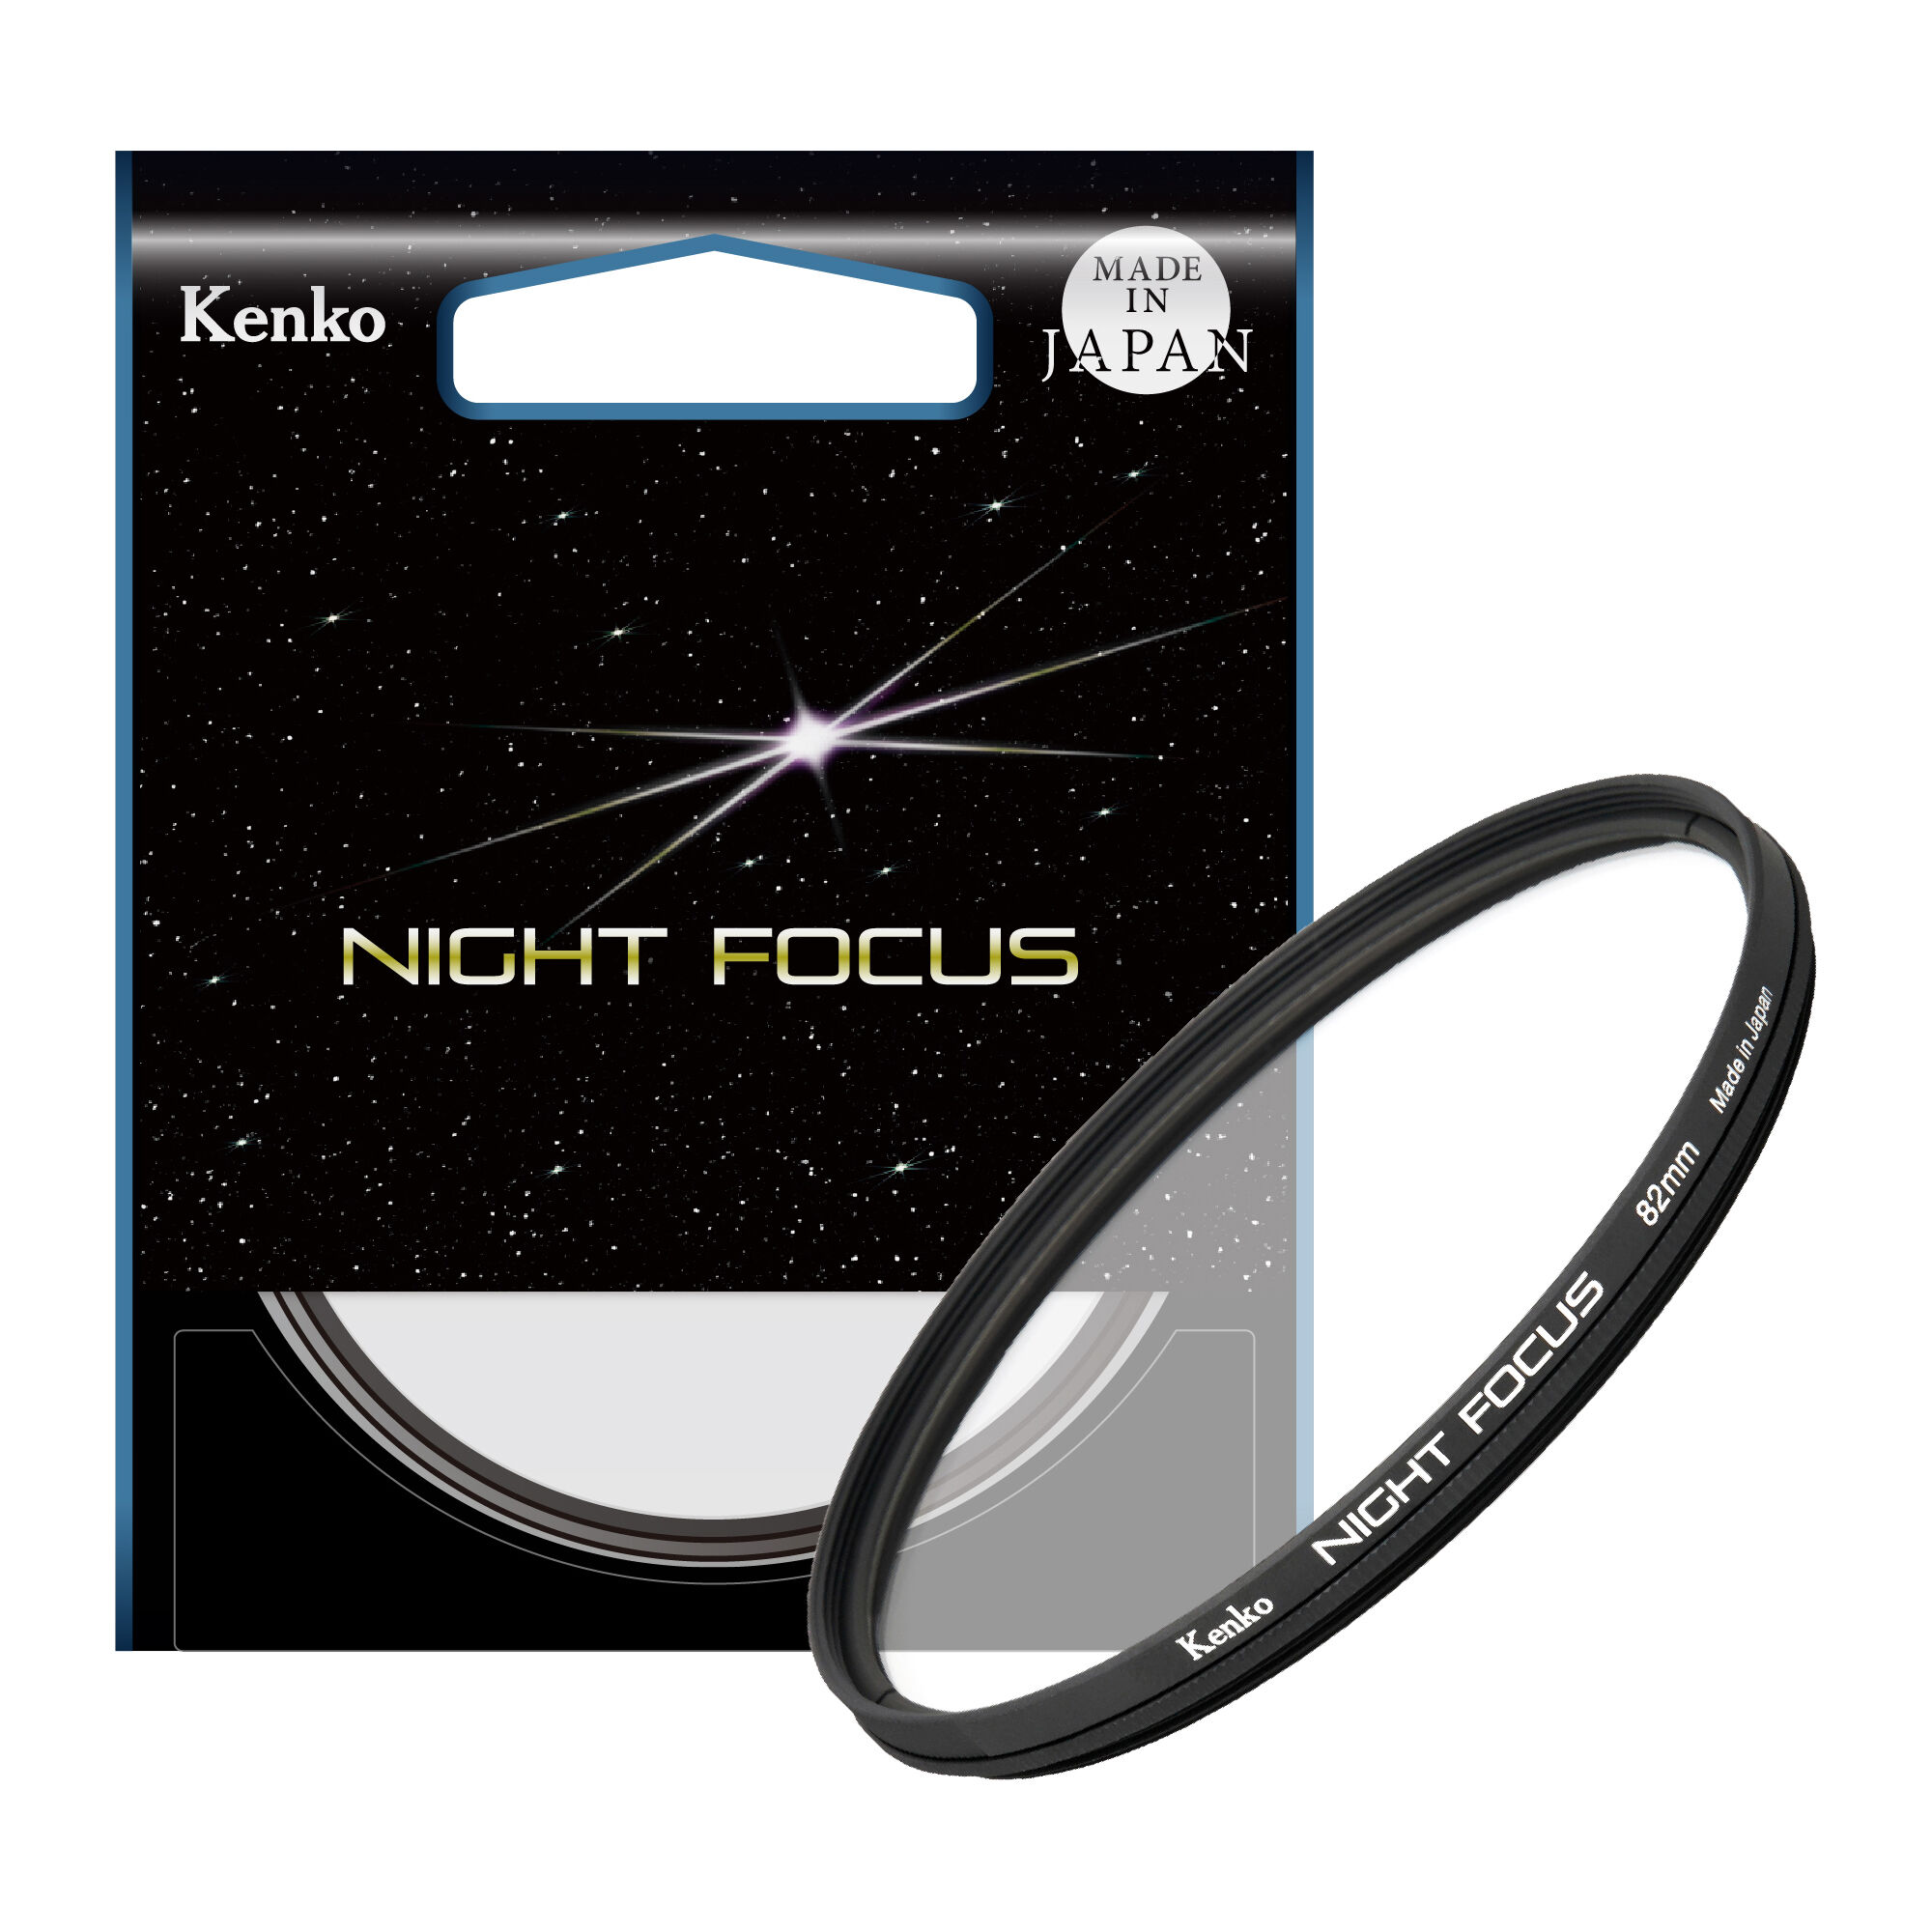 night_focus_products2000.jpg